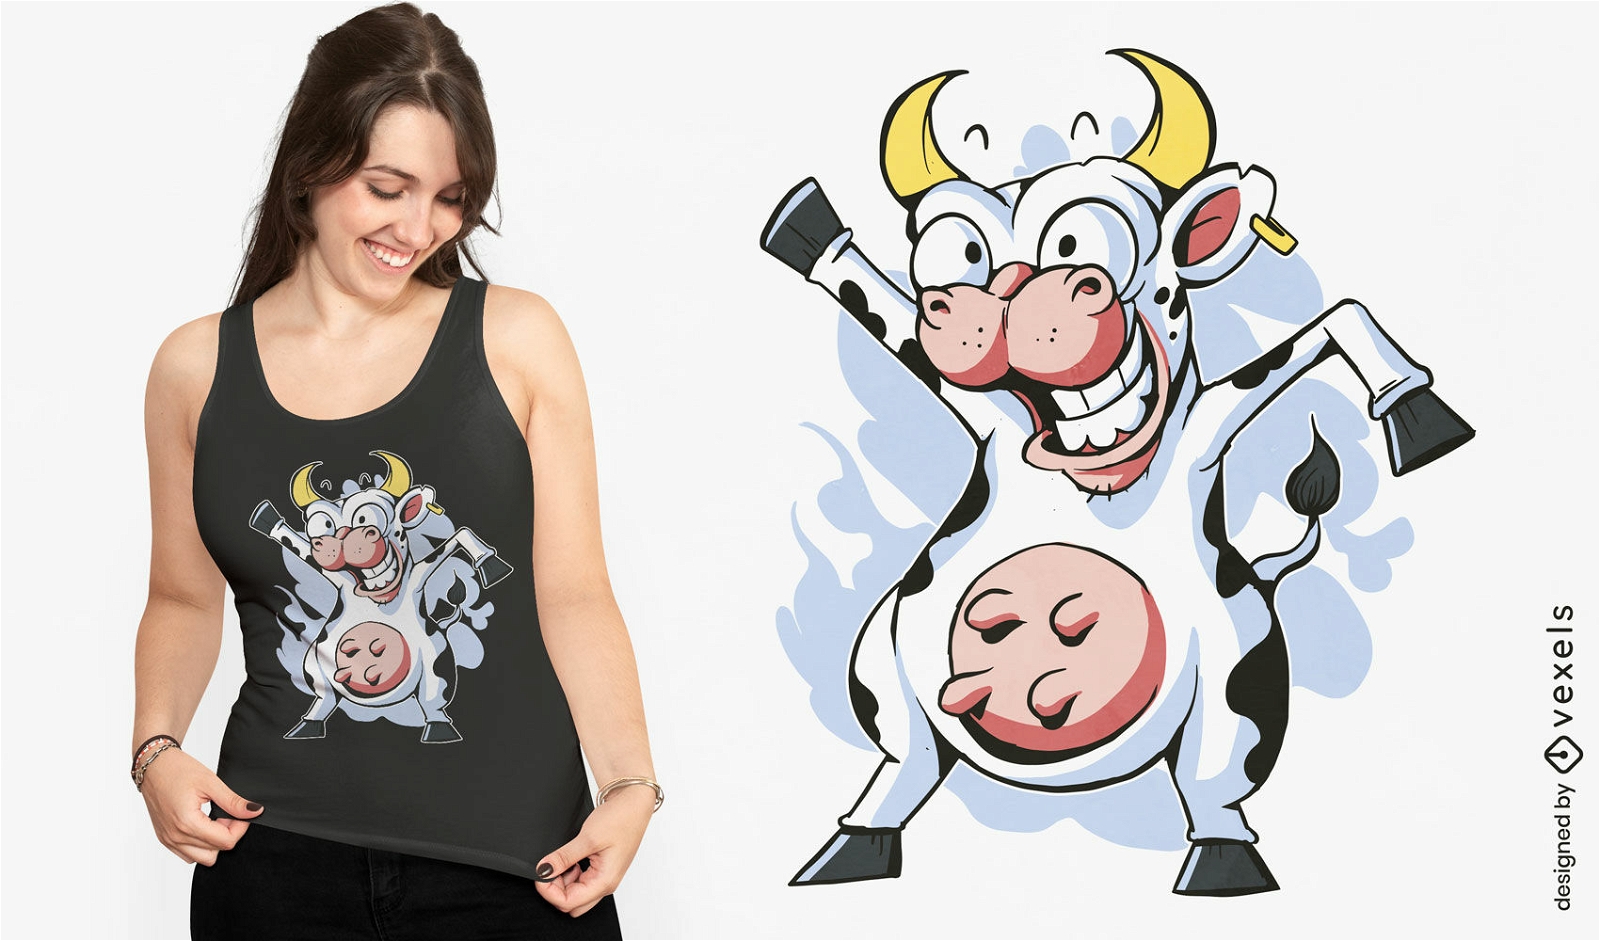 Crazy dancing cow character t-shirt design